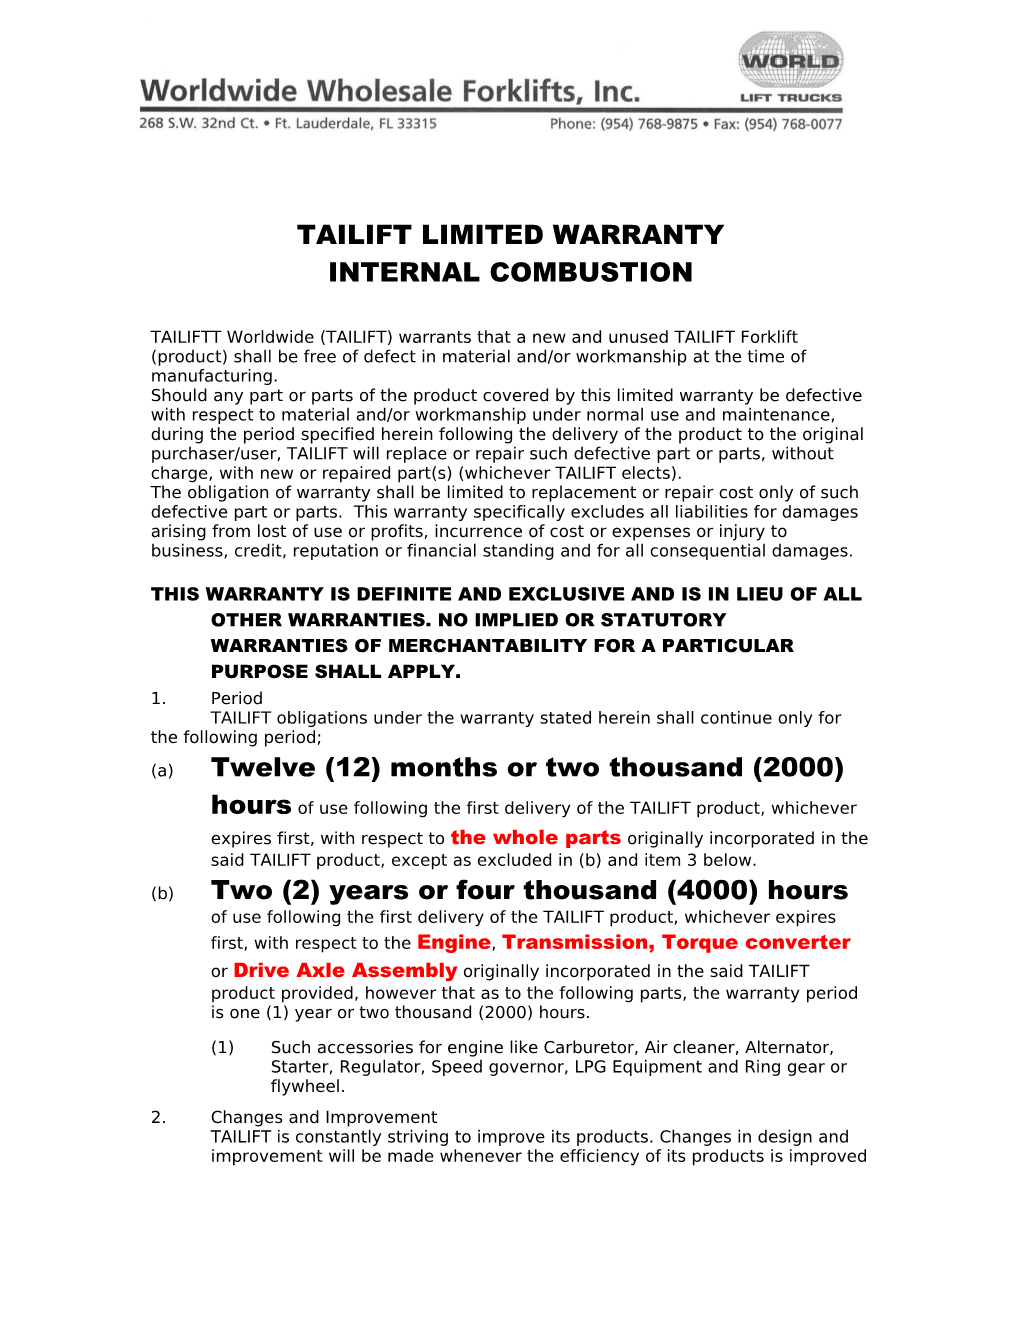 Tailift Limited Warranty